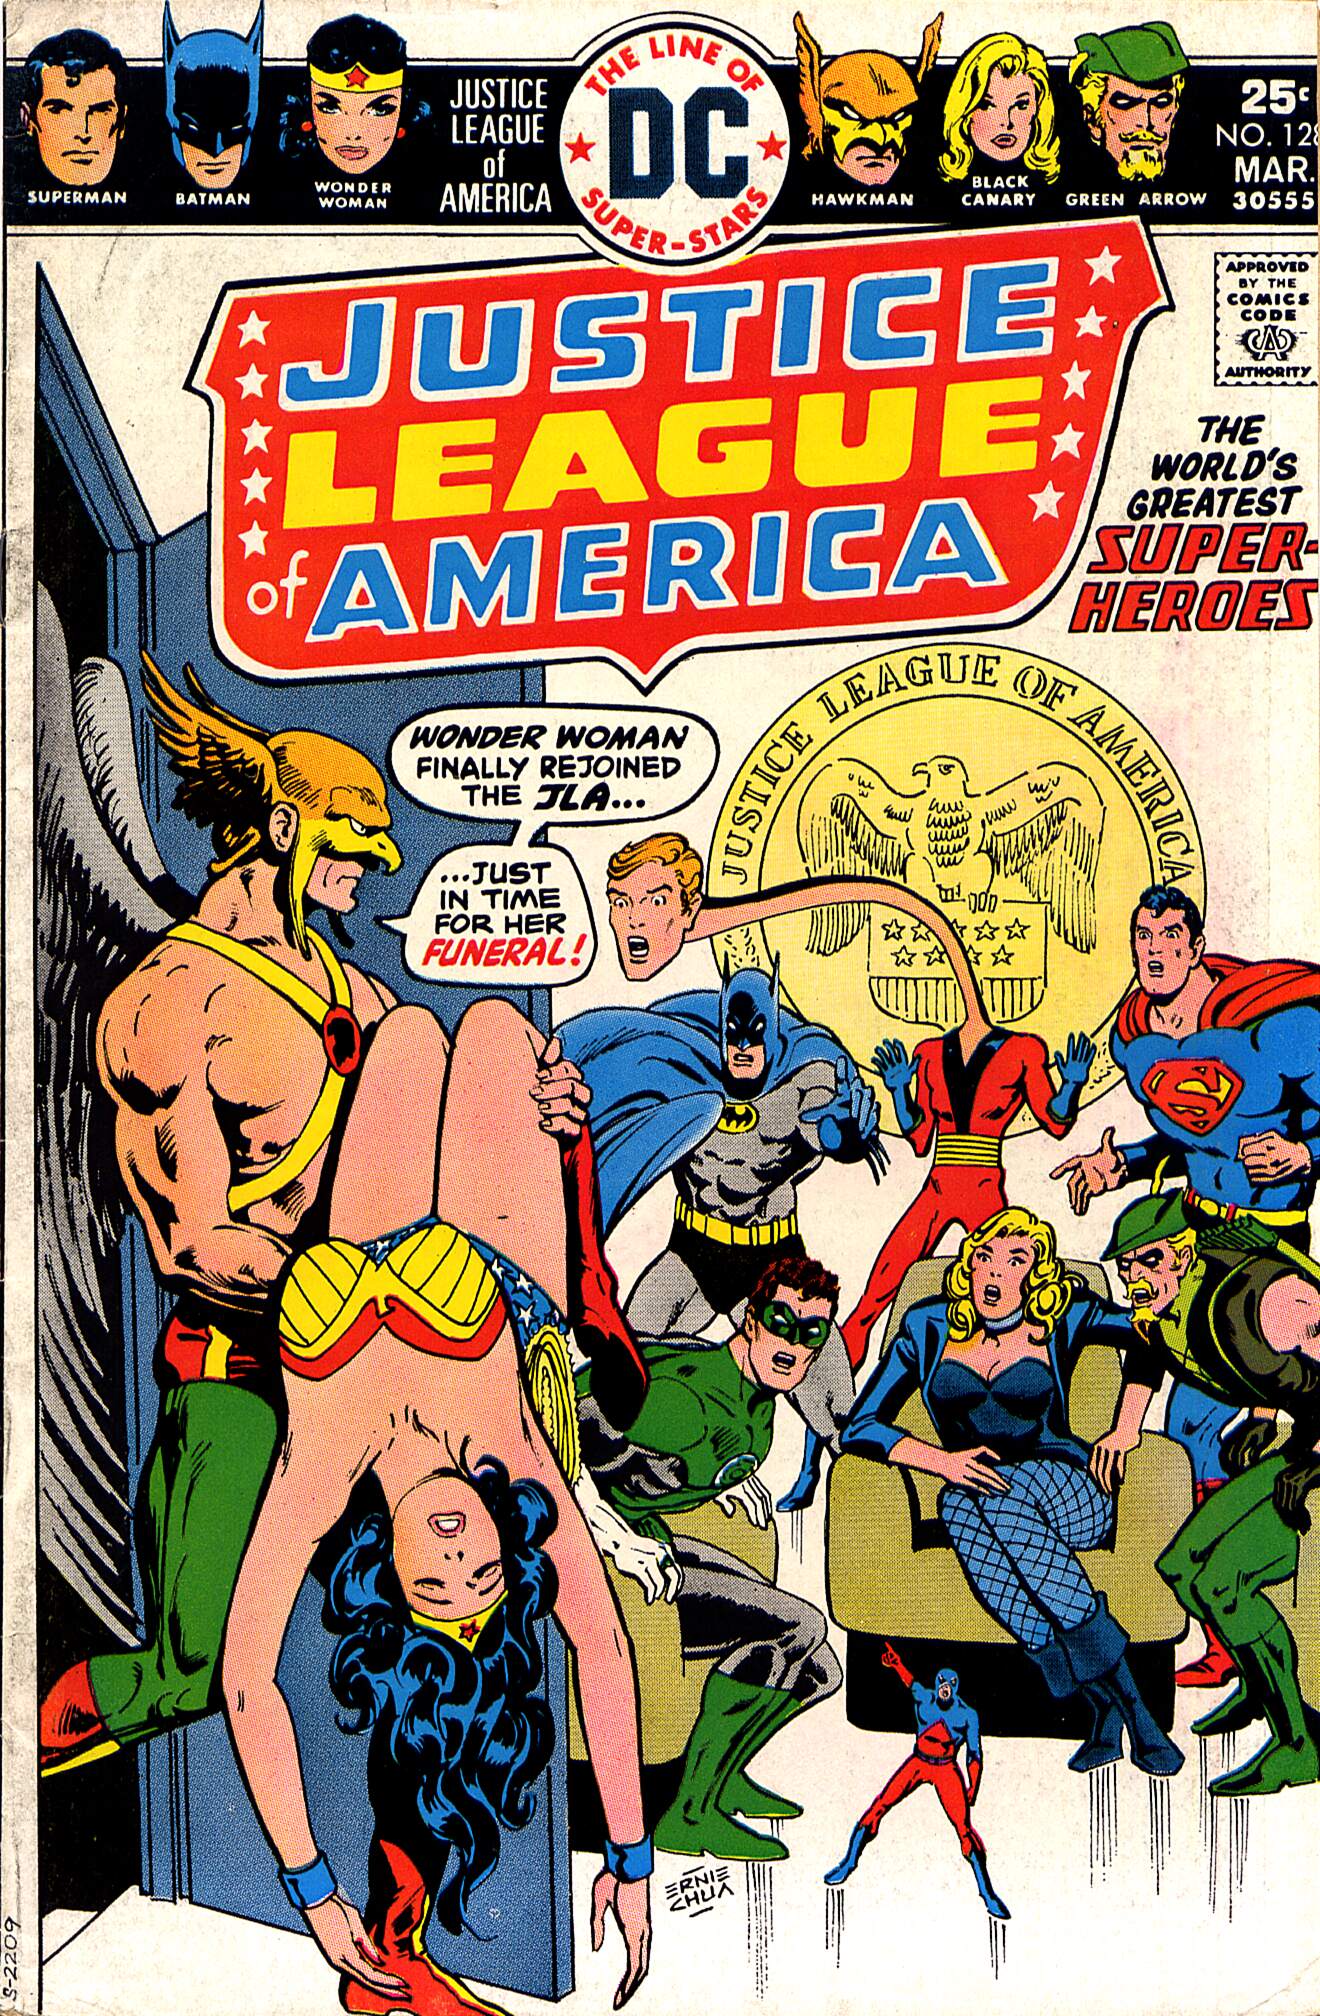 Justice League of America v1 128 | Read All Comics Online